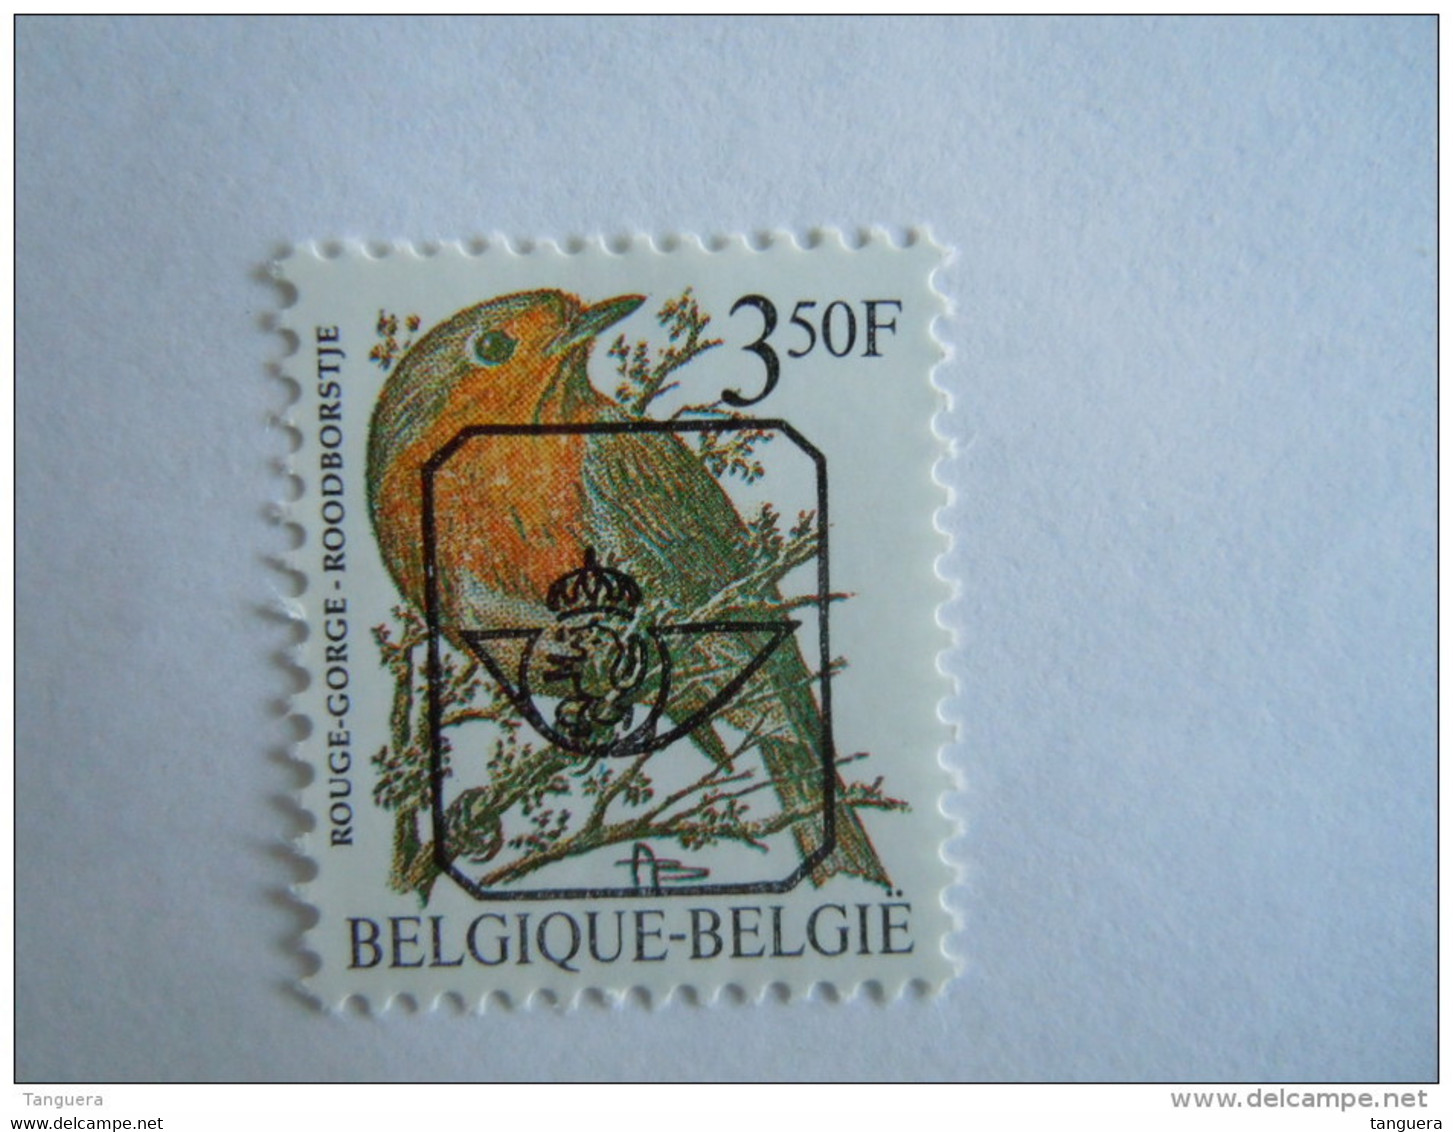 België Belgique Belgium 1986 Vogels Oiseaux Buzin Roodborstje Rouge-gorge Preo V822 GG MNH ** - Typo Precancels 1986-96 (Birds)